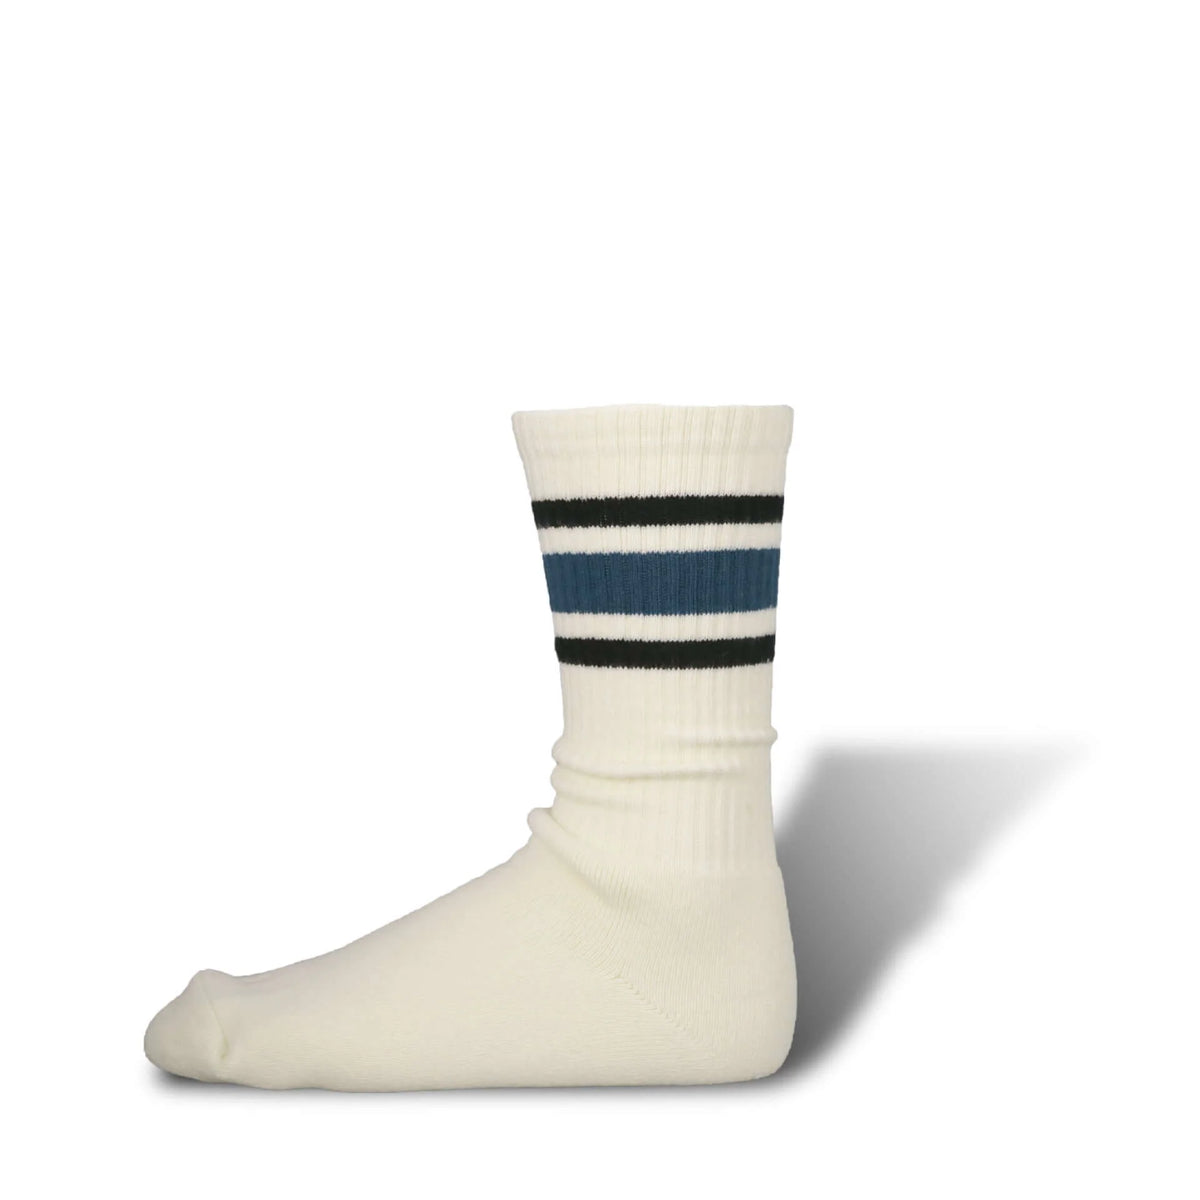 Decka 80s Skater Socks Navy / Black [de-11]